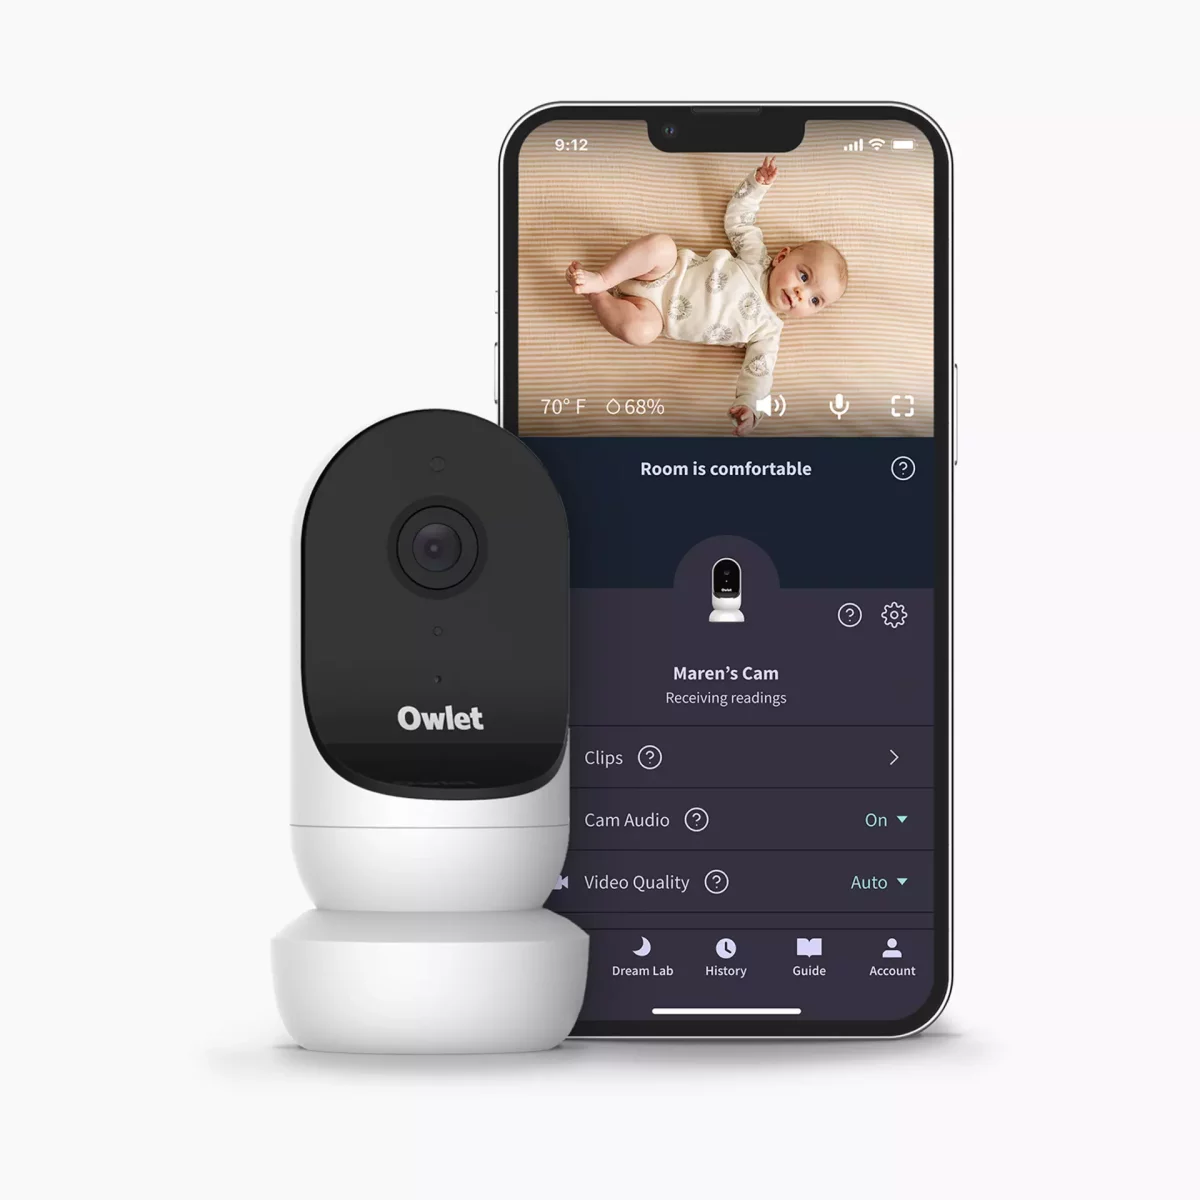 Babyphone owlet cam 2 et son application mobile